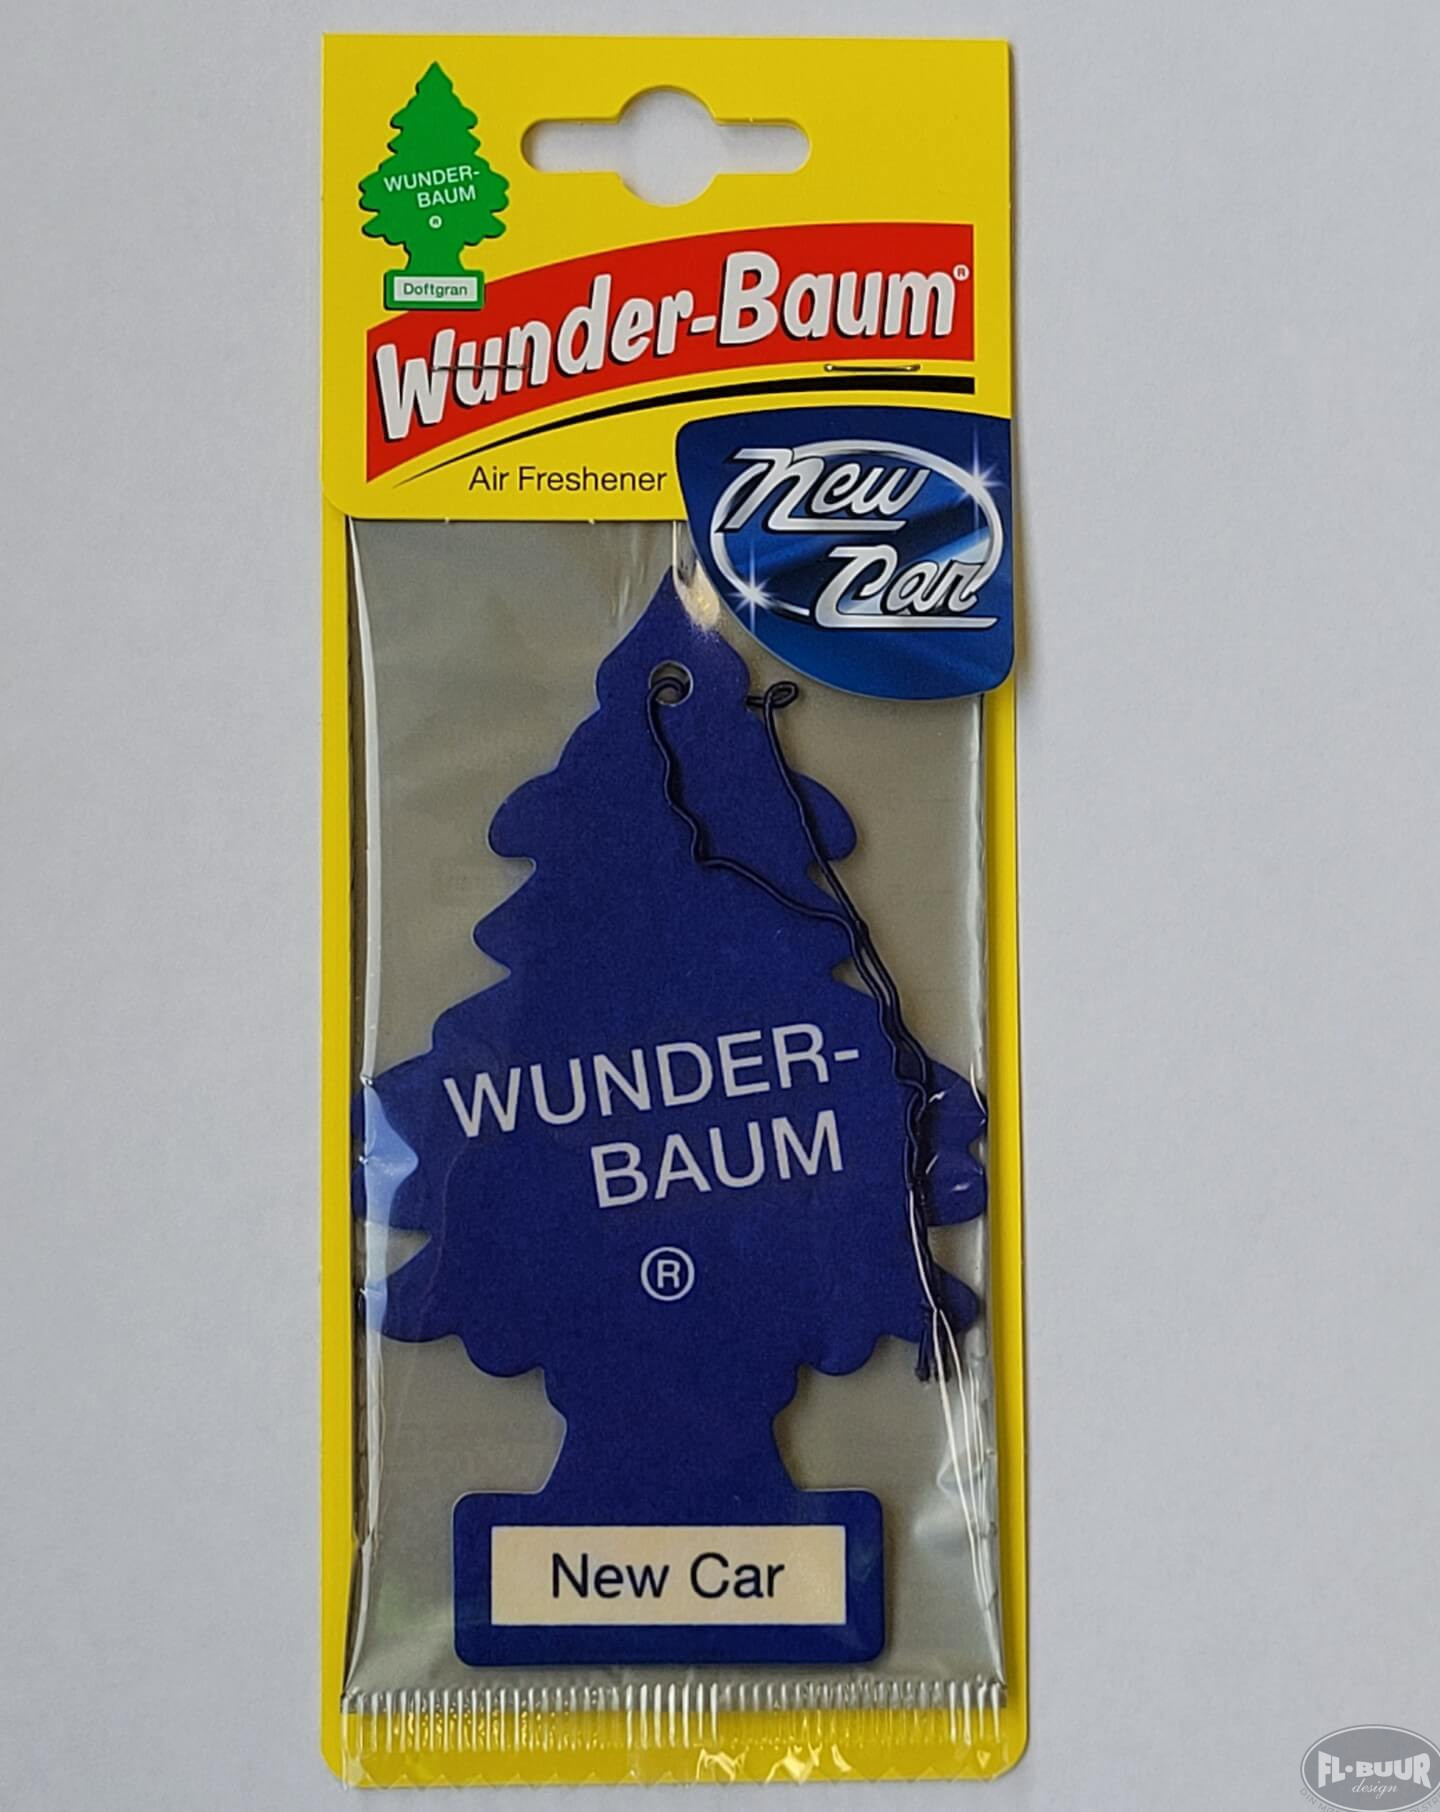 https://flbuur.dk/wp-content/uploads/2023/02/Wunder-Baum-New-Car.jpg